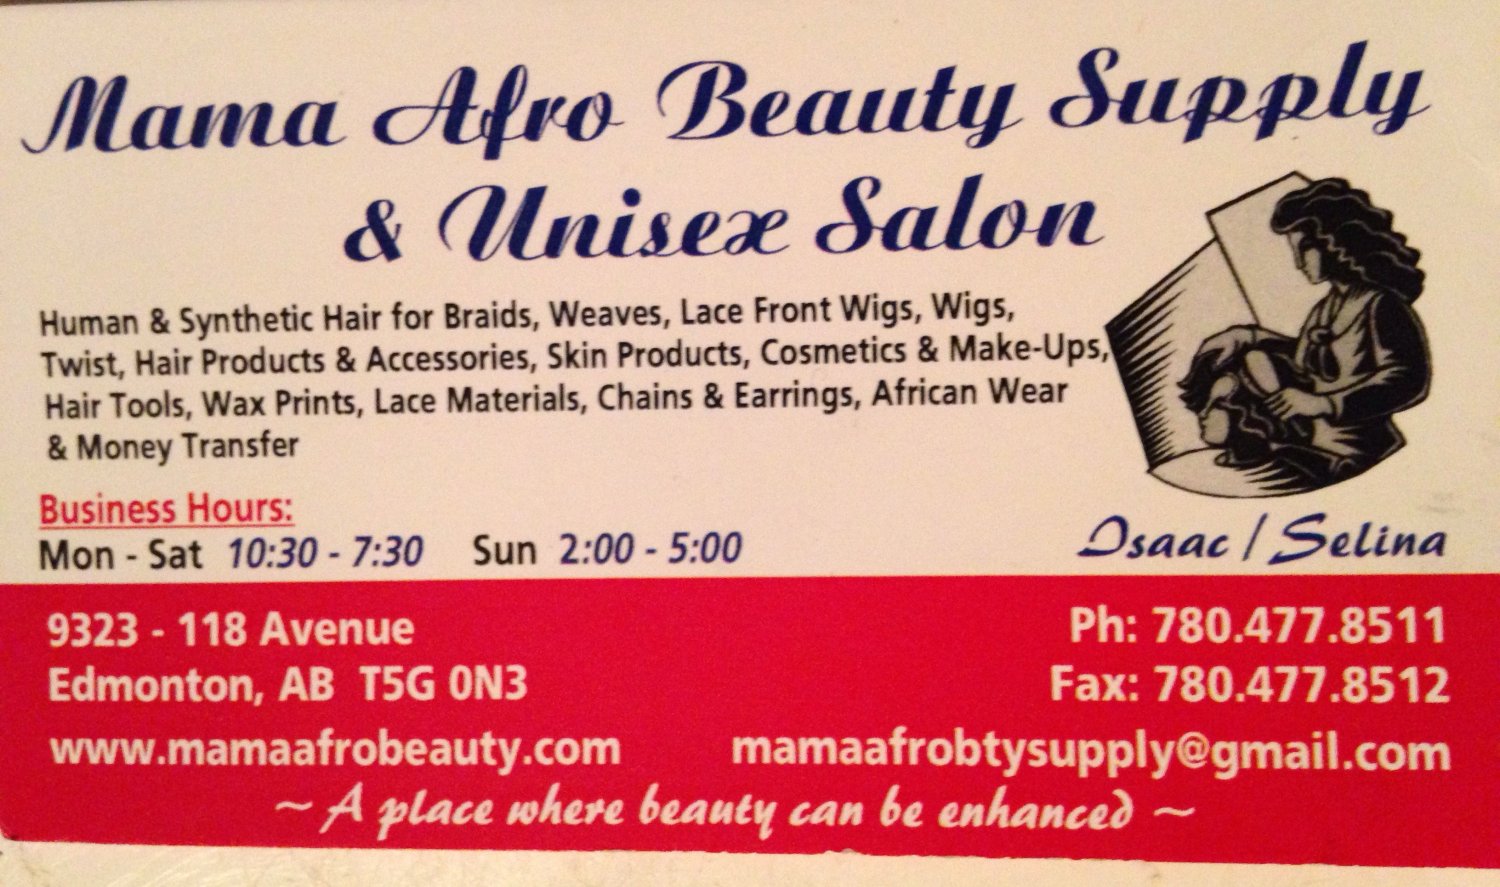 Mama Afro Beauty Supply & Salon - Edmonton, Alberta Canada